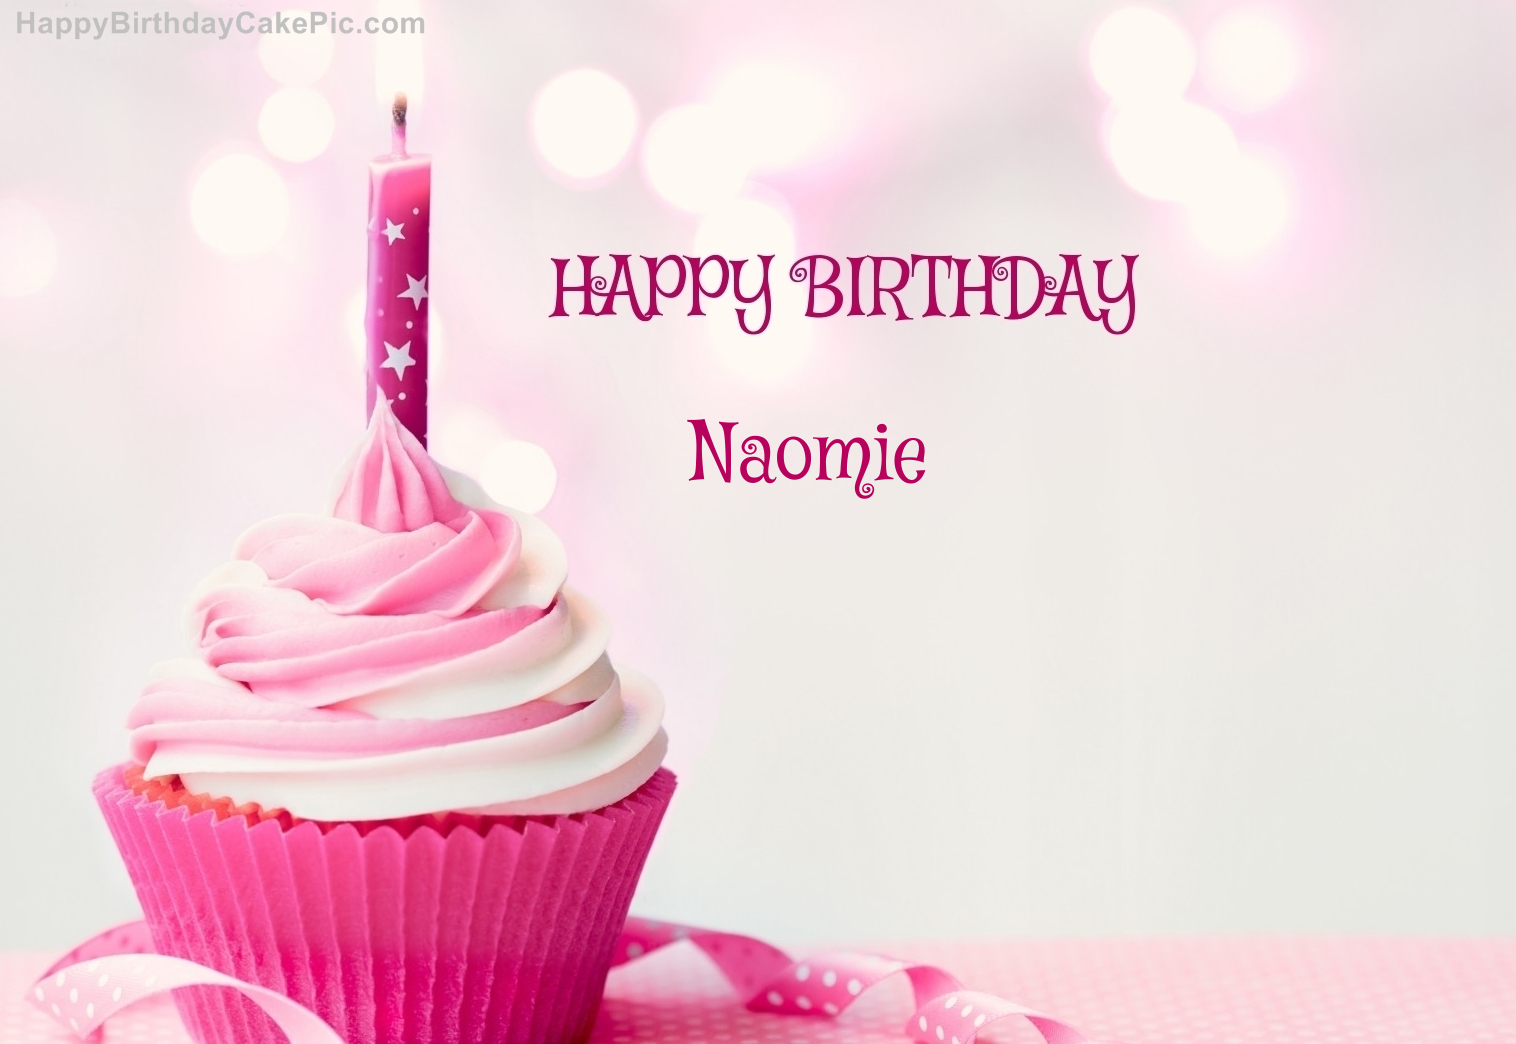 Image result for happy birthday naomie